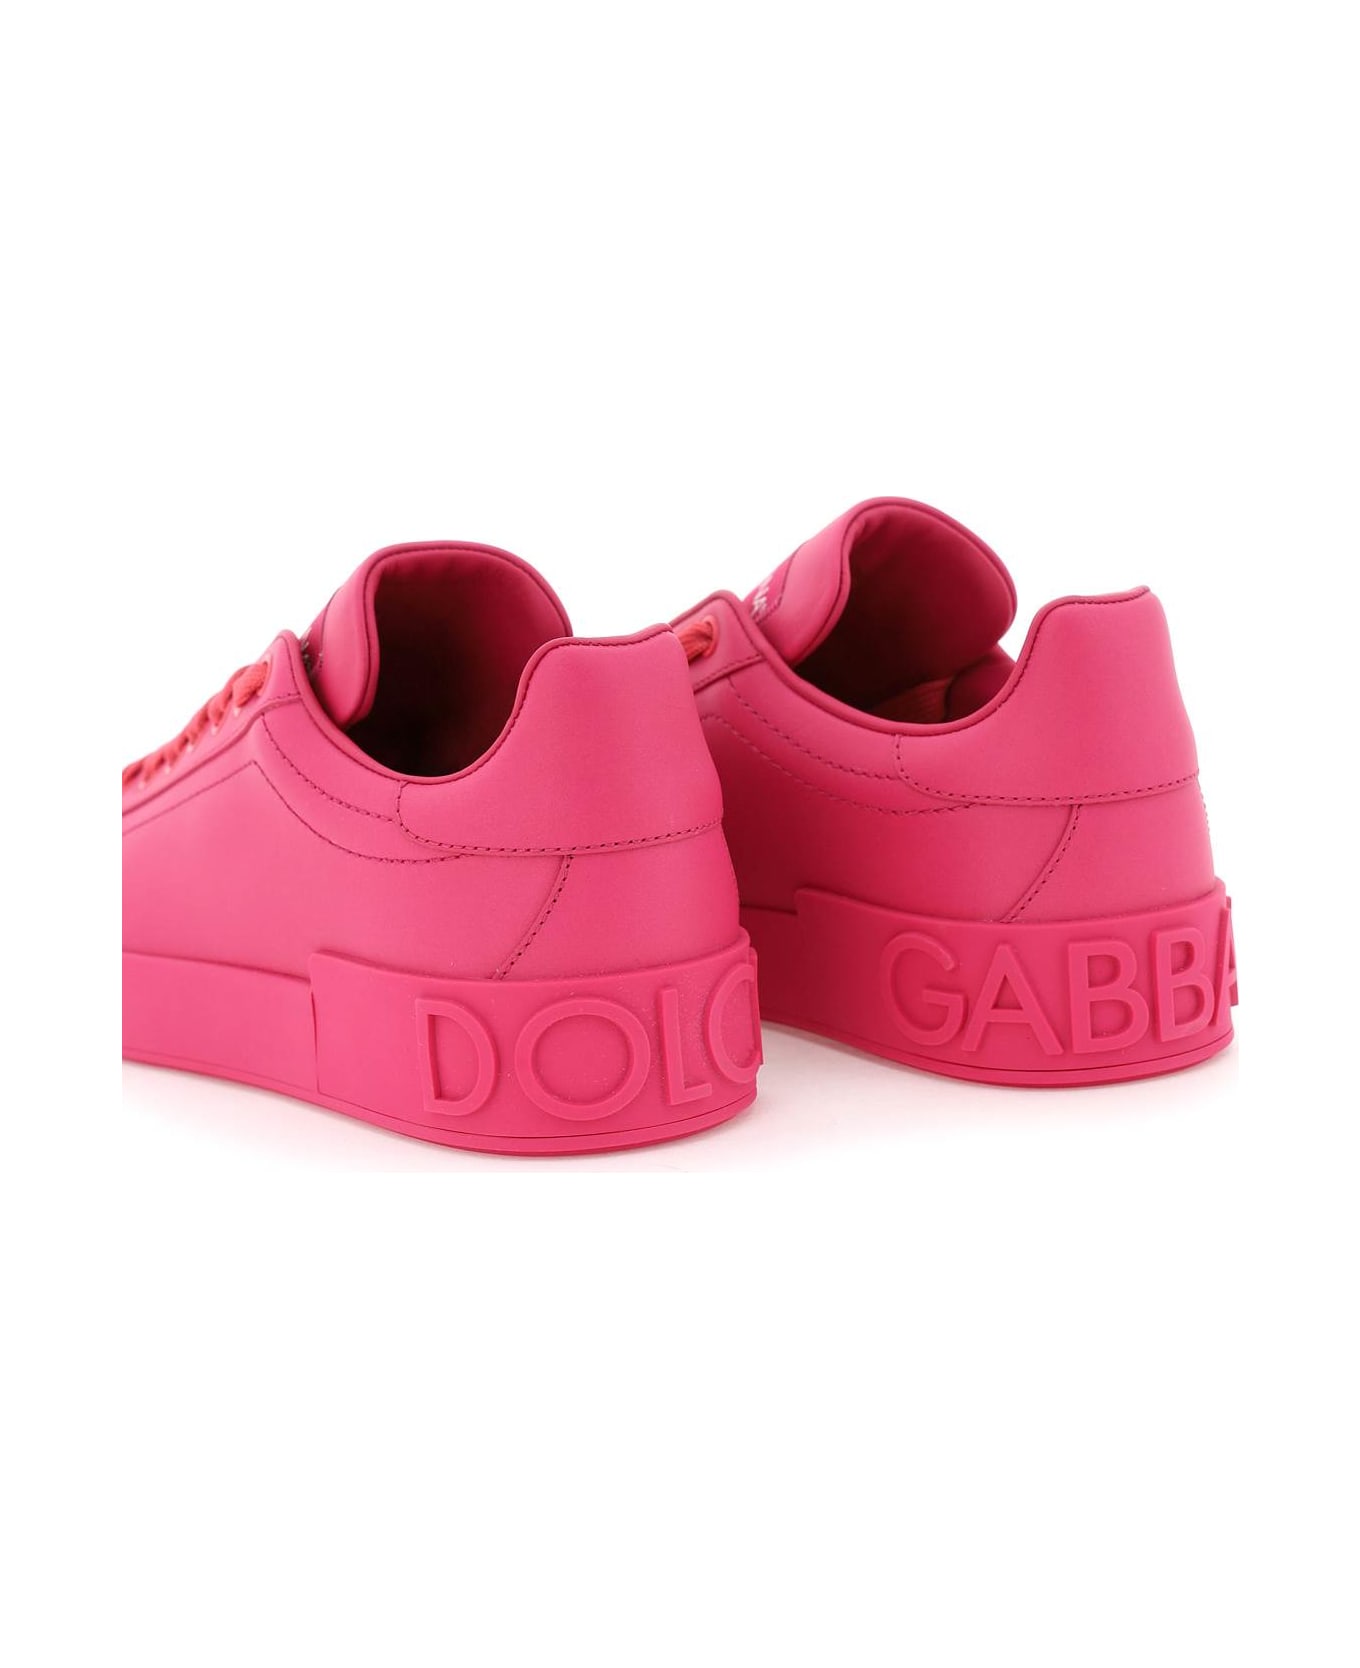 Dolce & Gabbana Portofino Sneakers - PINK スニーカー